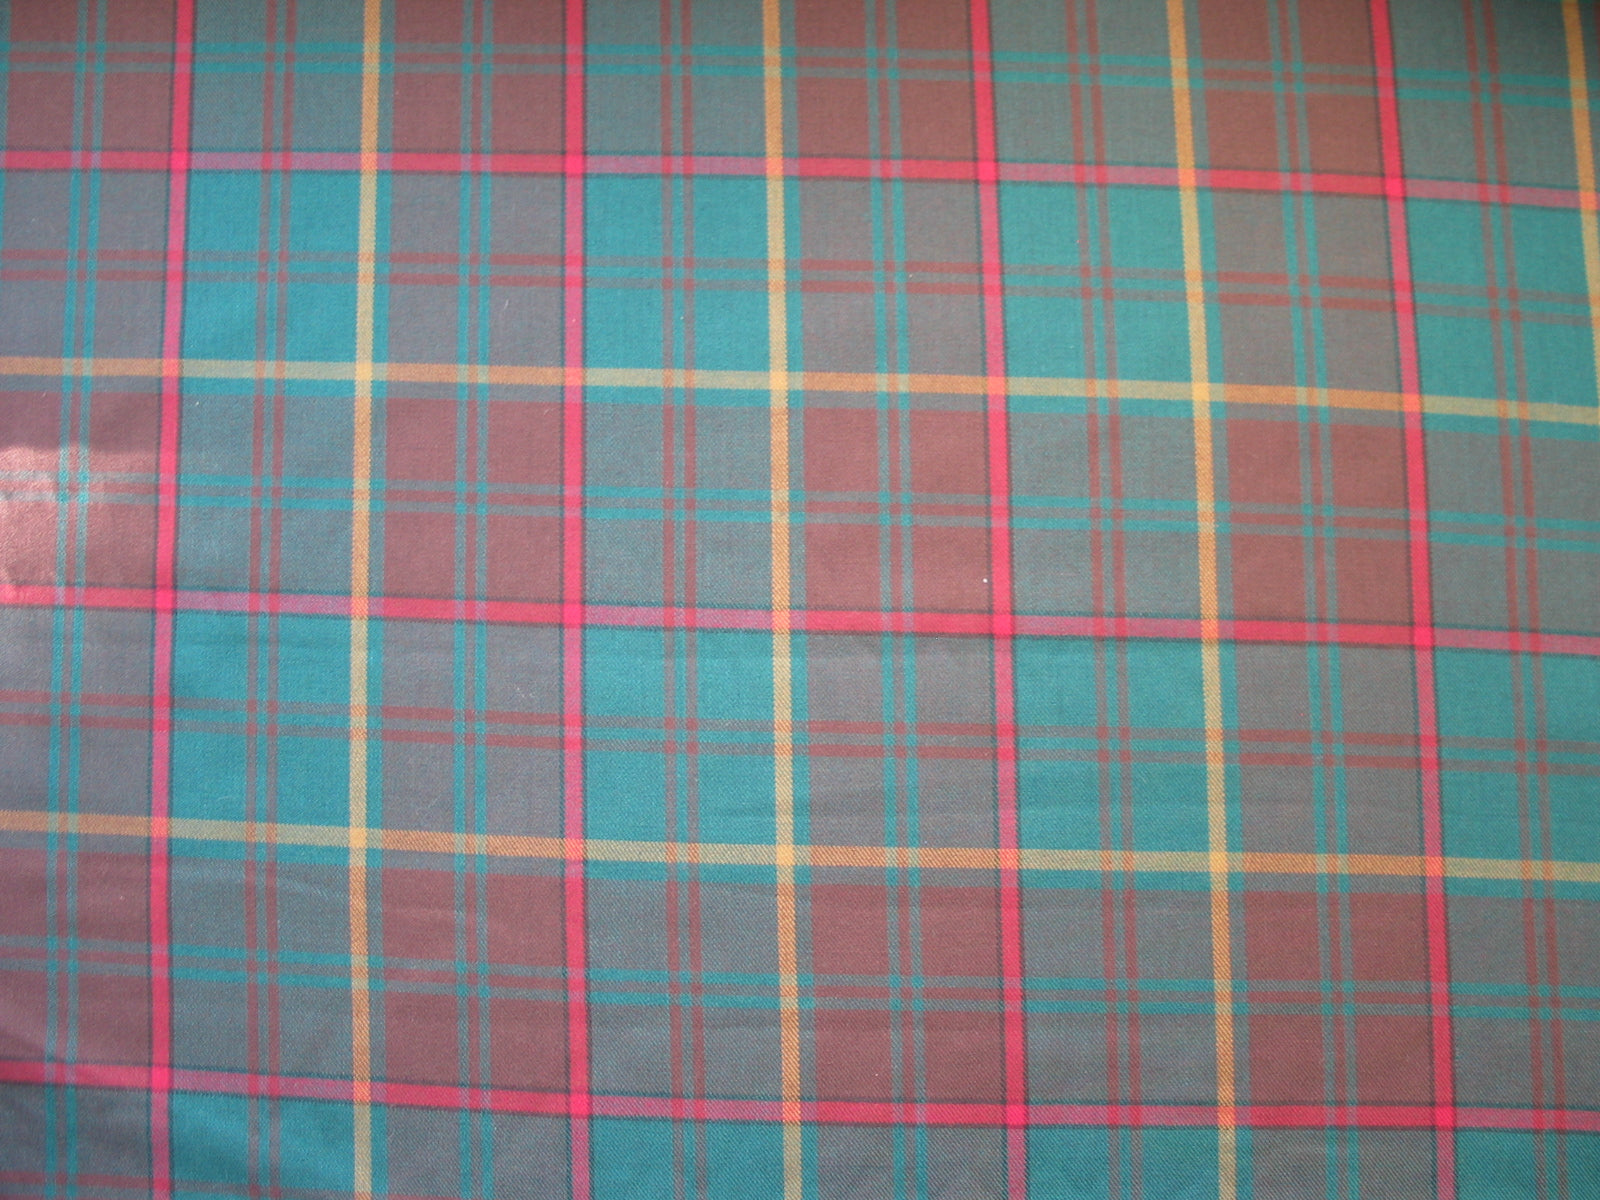 Ontario Tartan Fabric